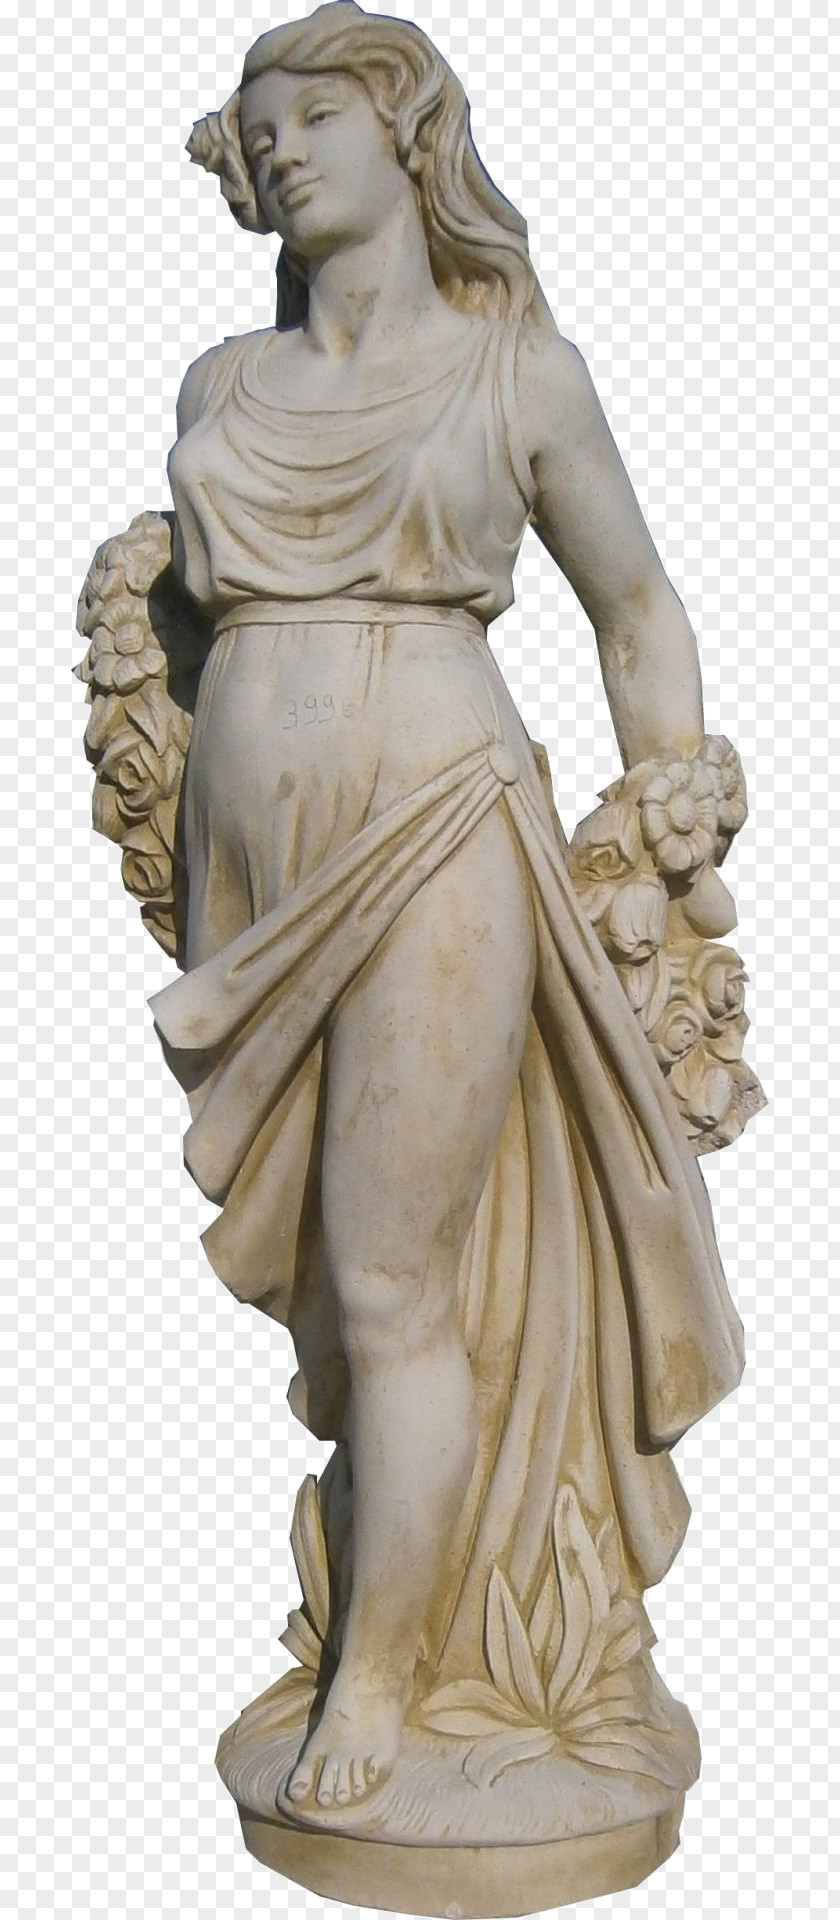 Woman Statue Figurine Classical Sculpture Ancient Greek PNG